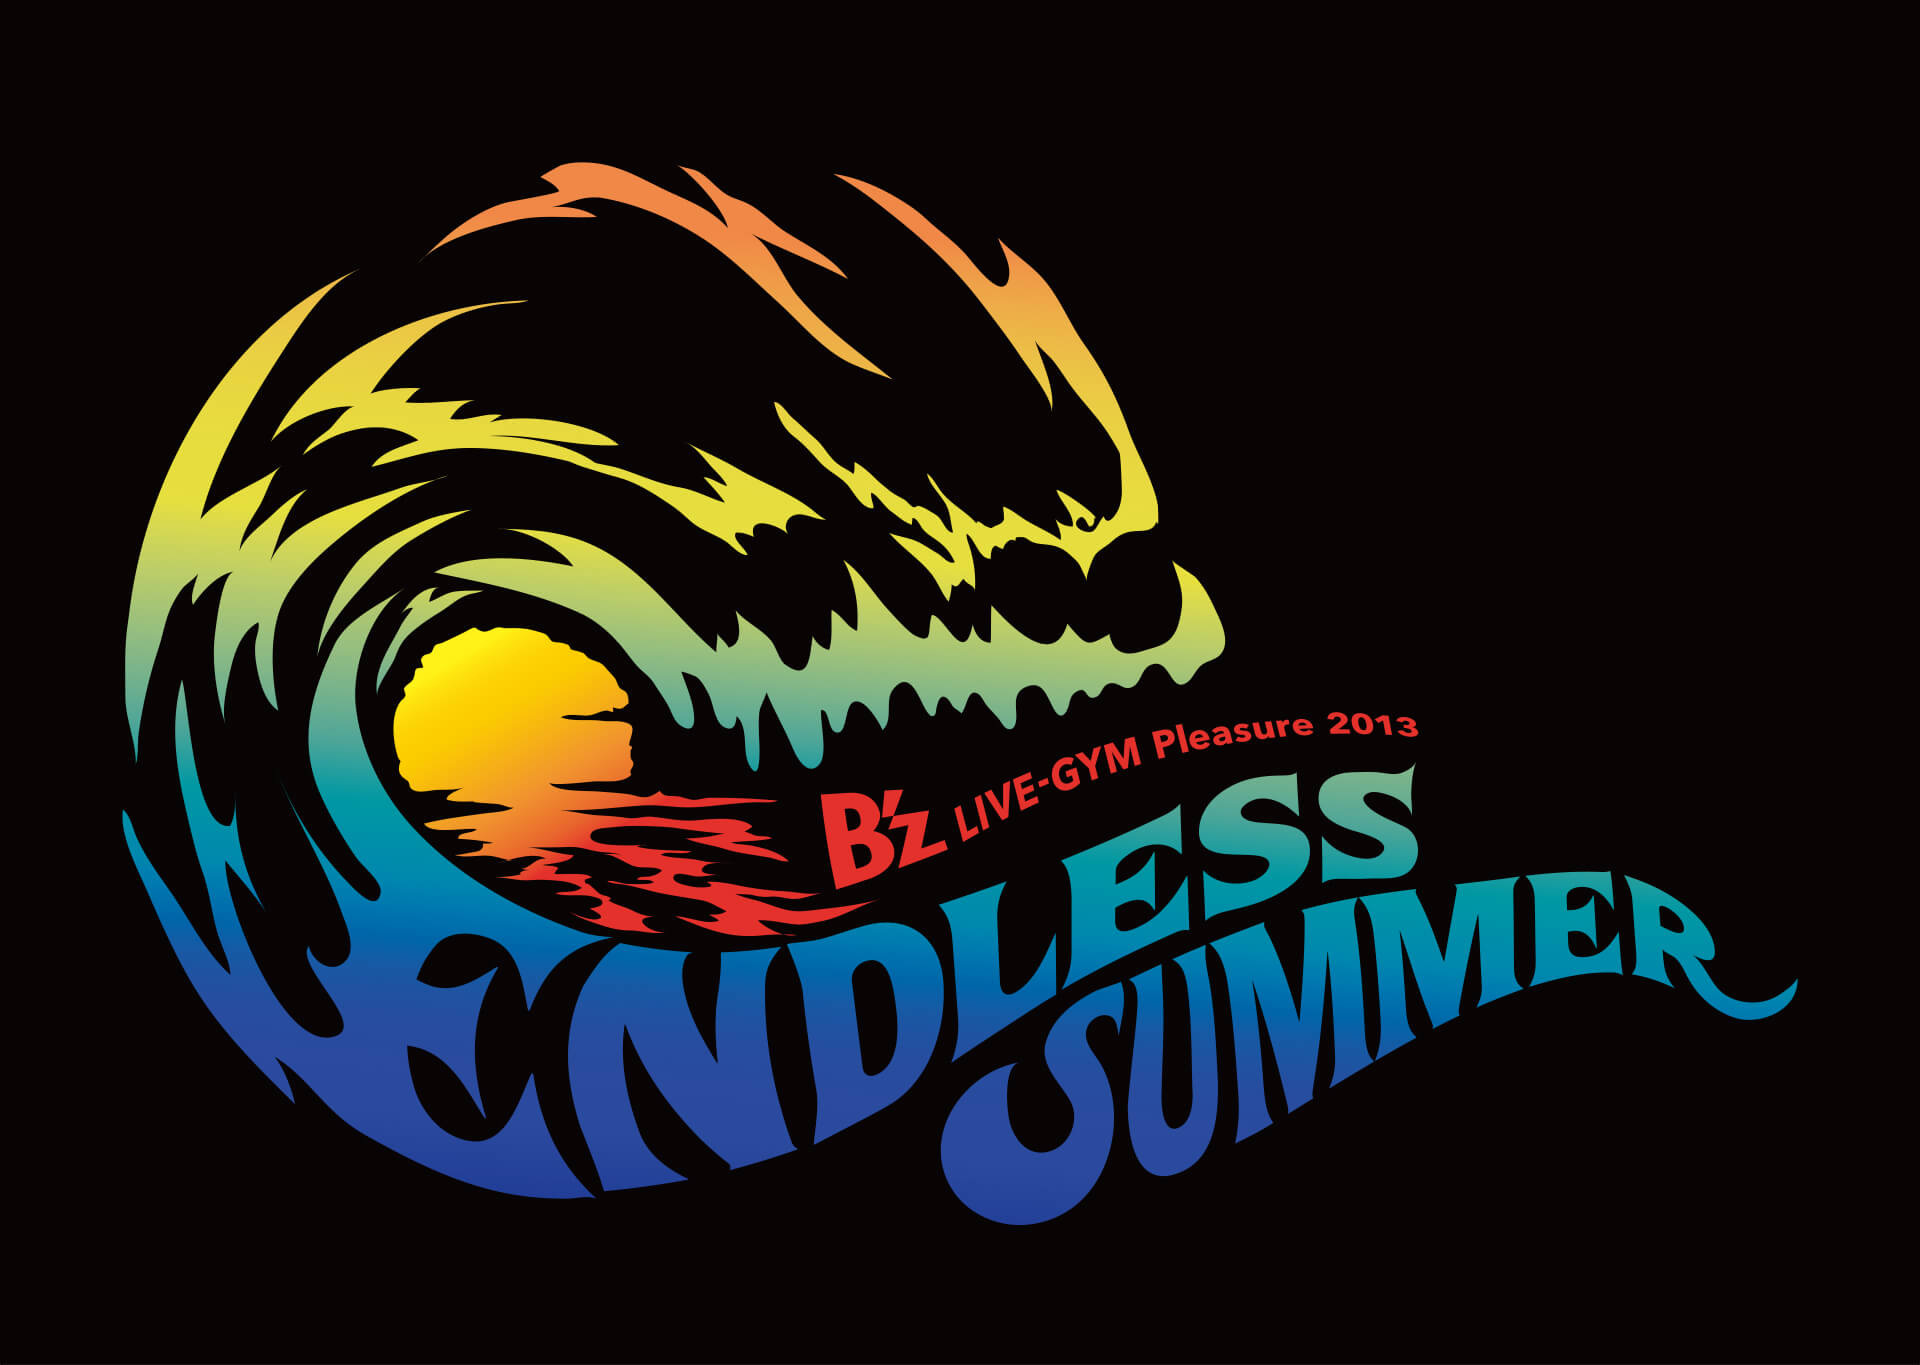 B’z LIVE-GYM Pleasure 2013 ENDLESS SUMMER